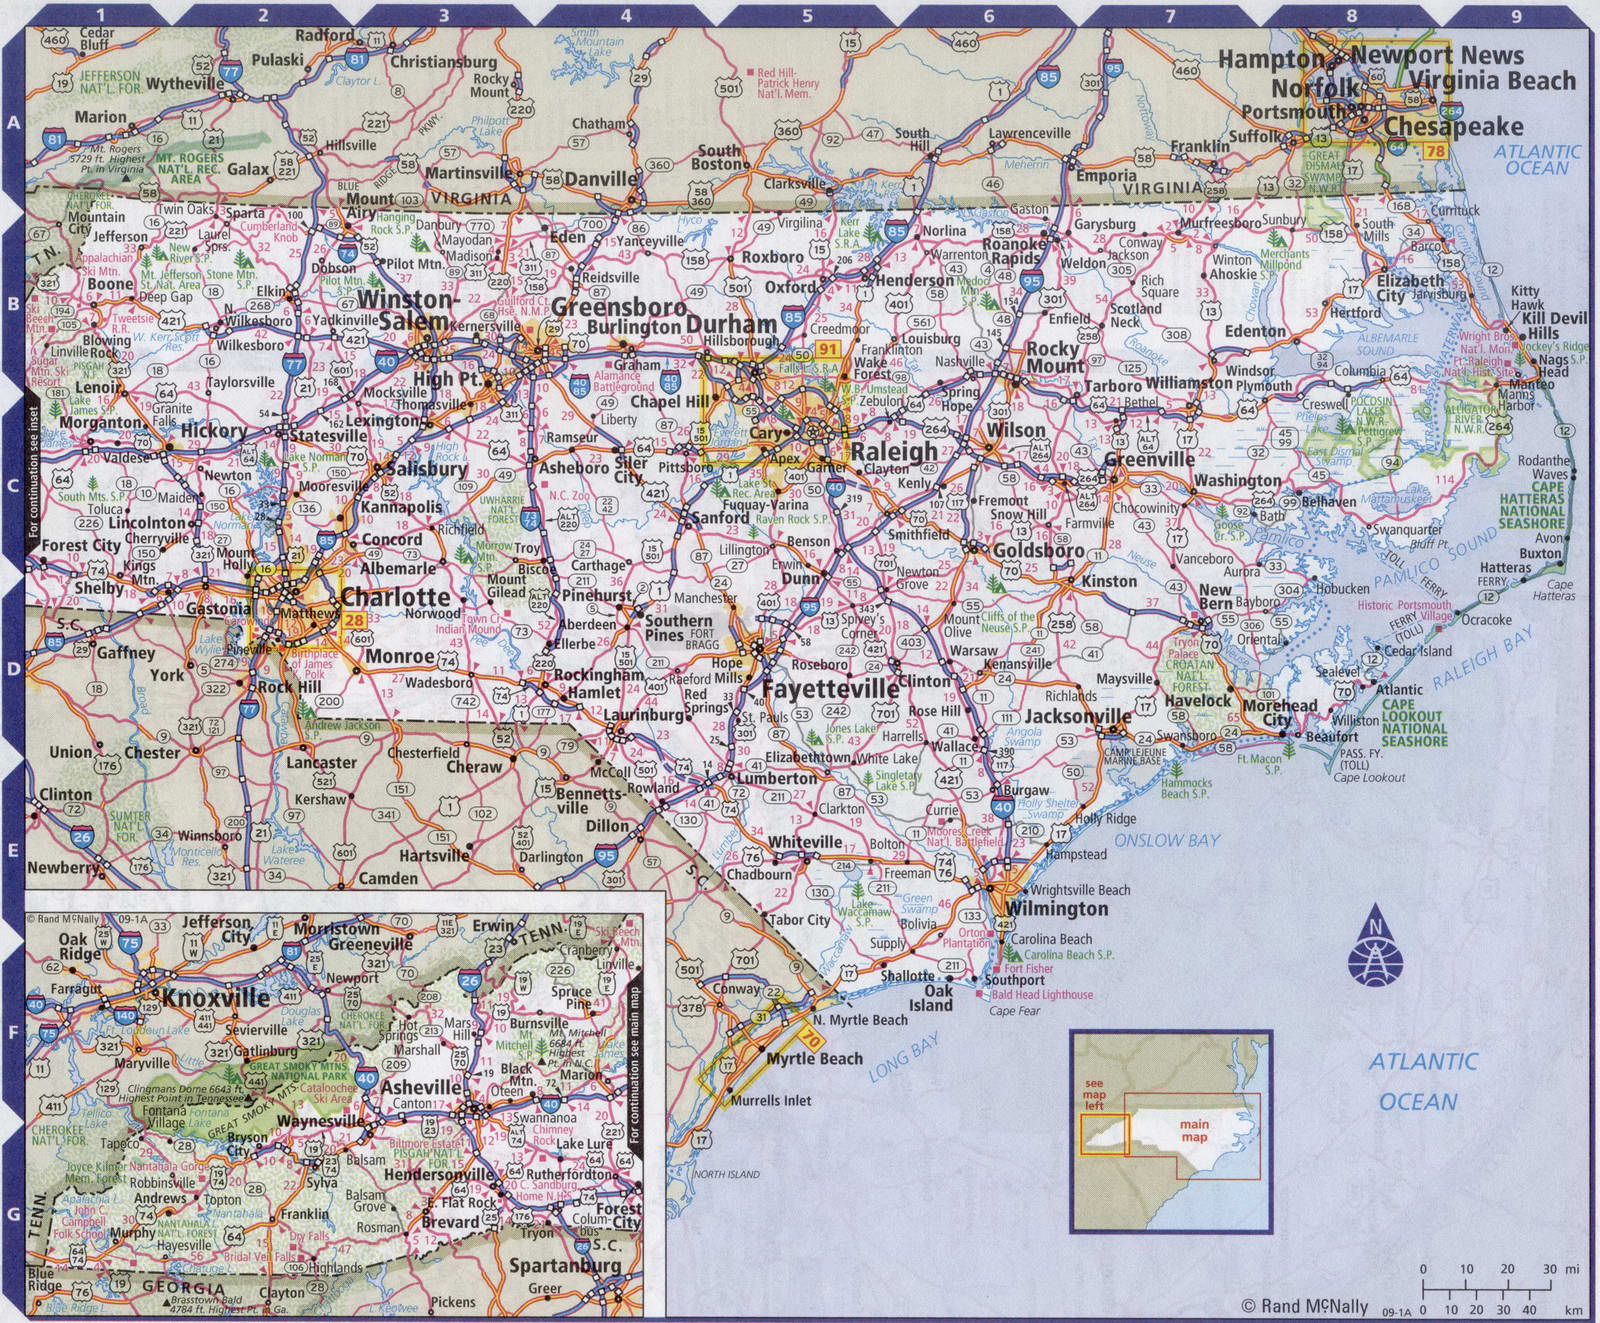 North Carolina state complete map